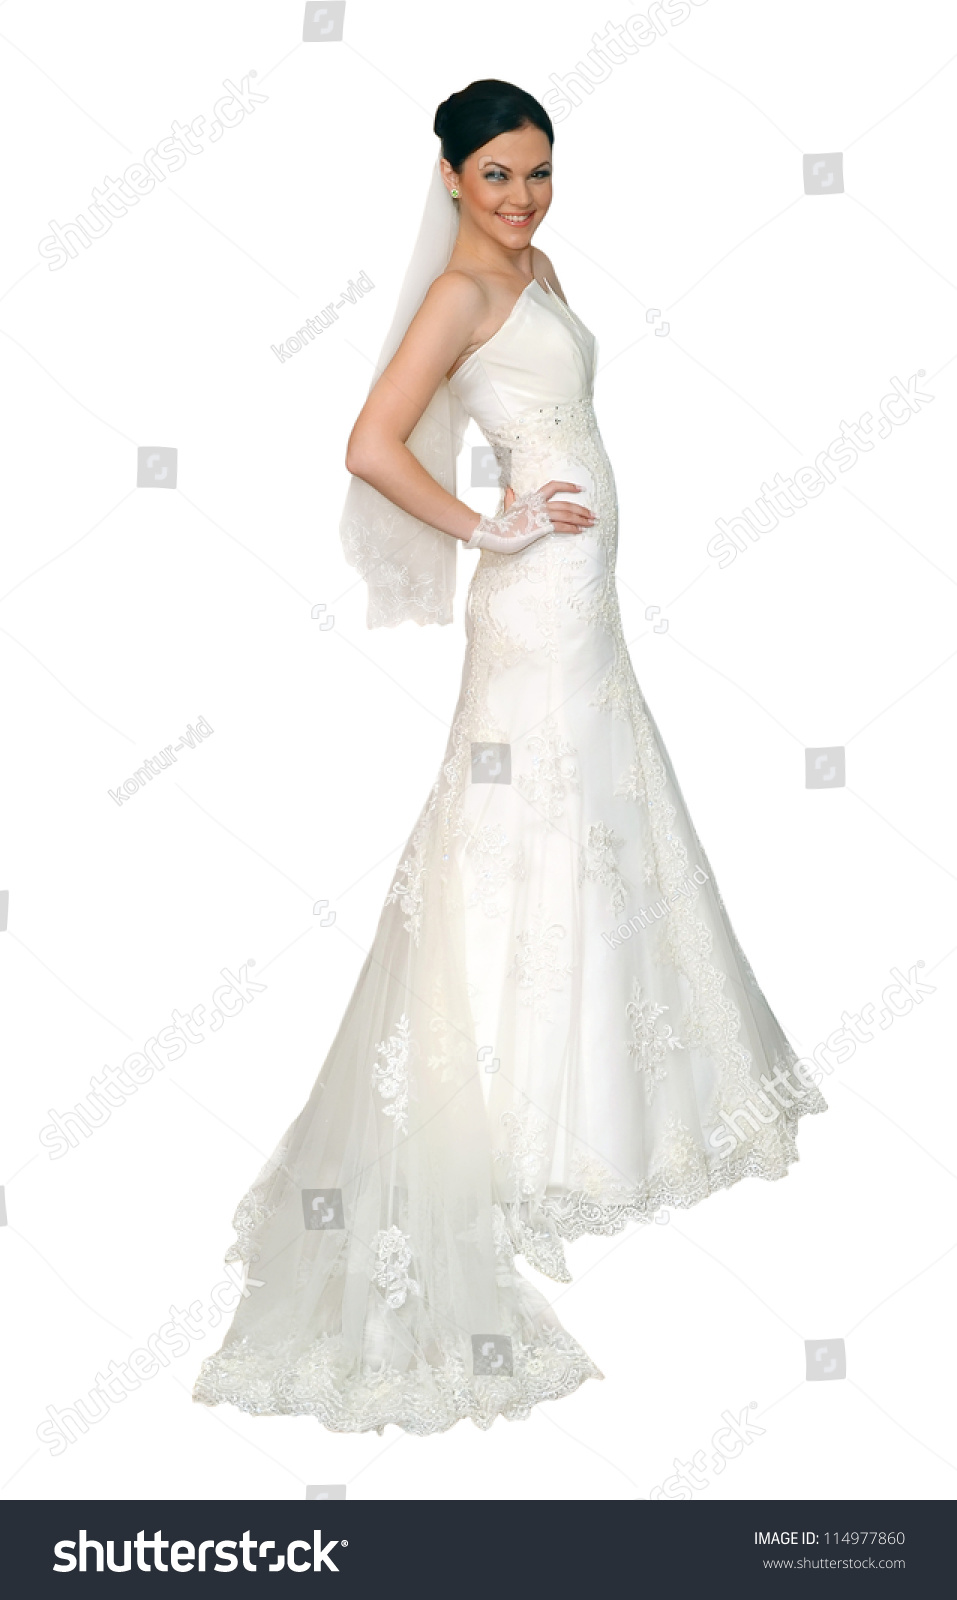 Gfxworld Shutterstock Beautiful Bride Photos 27